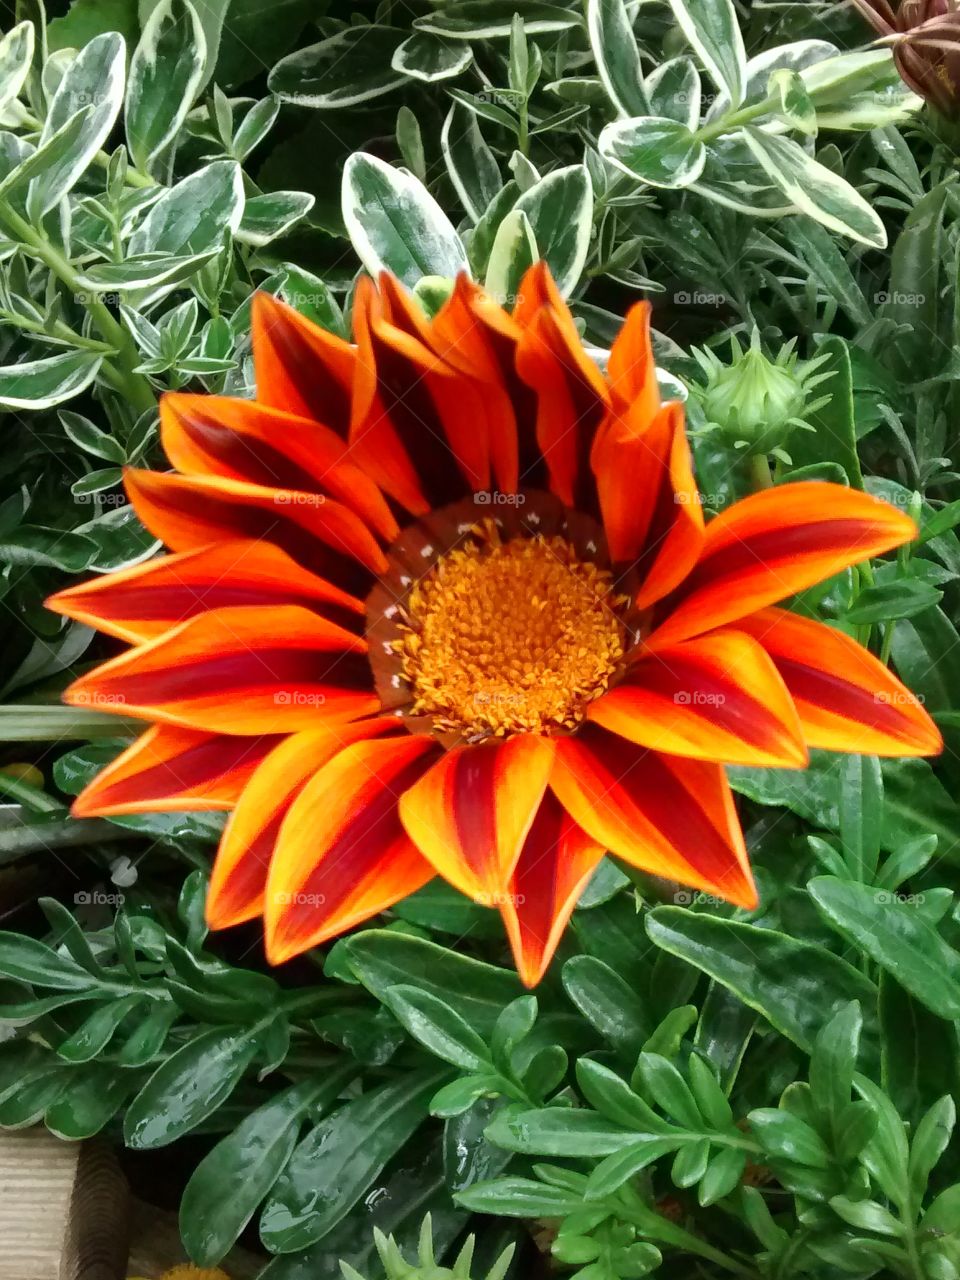 A sunburst flower